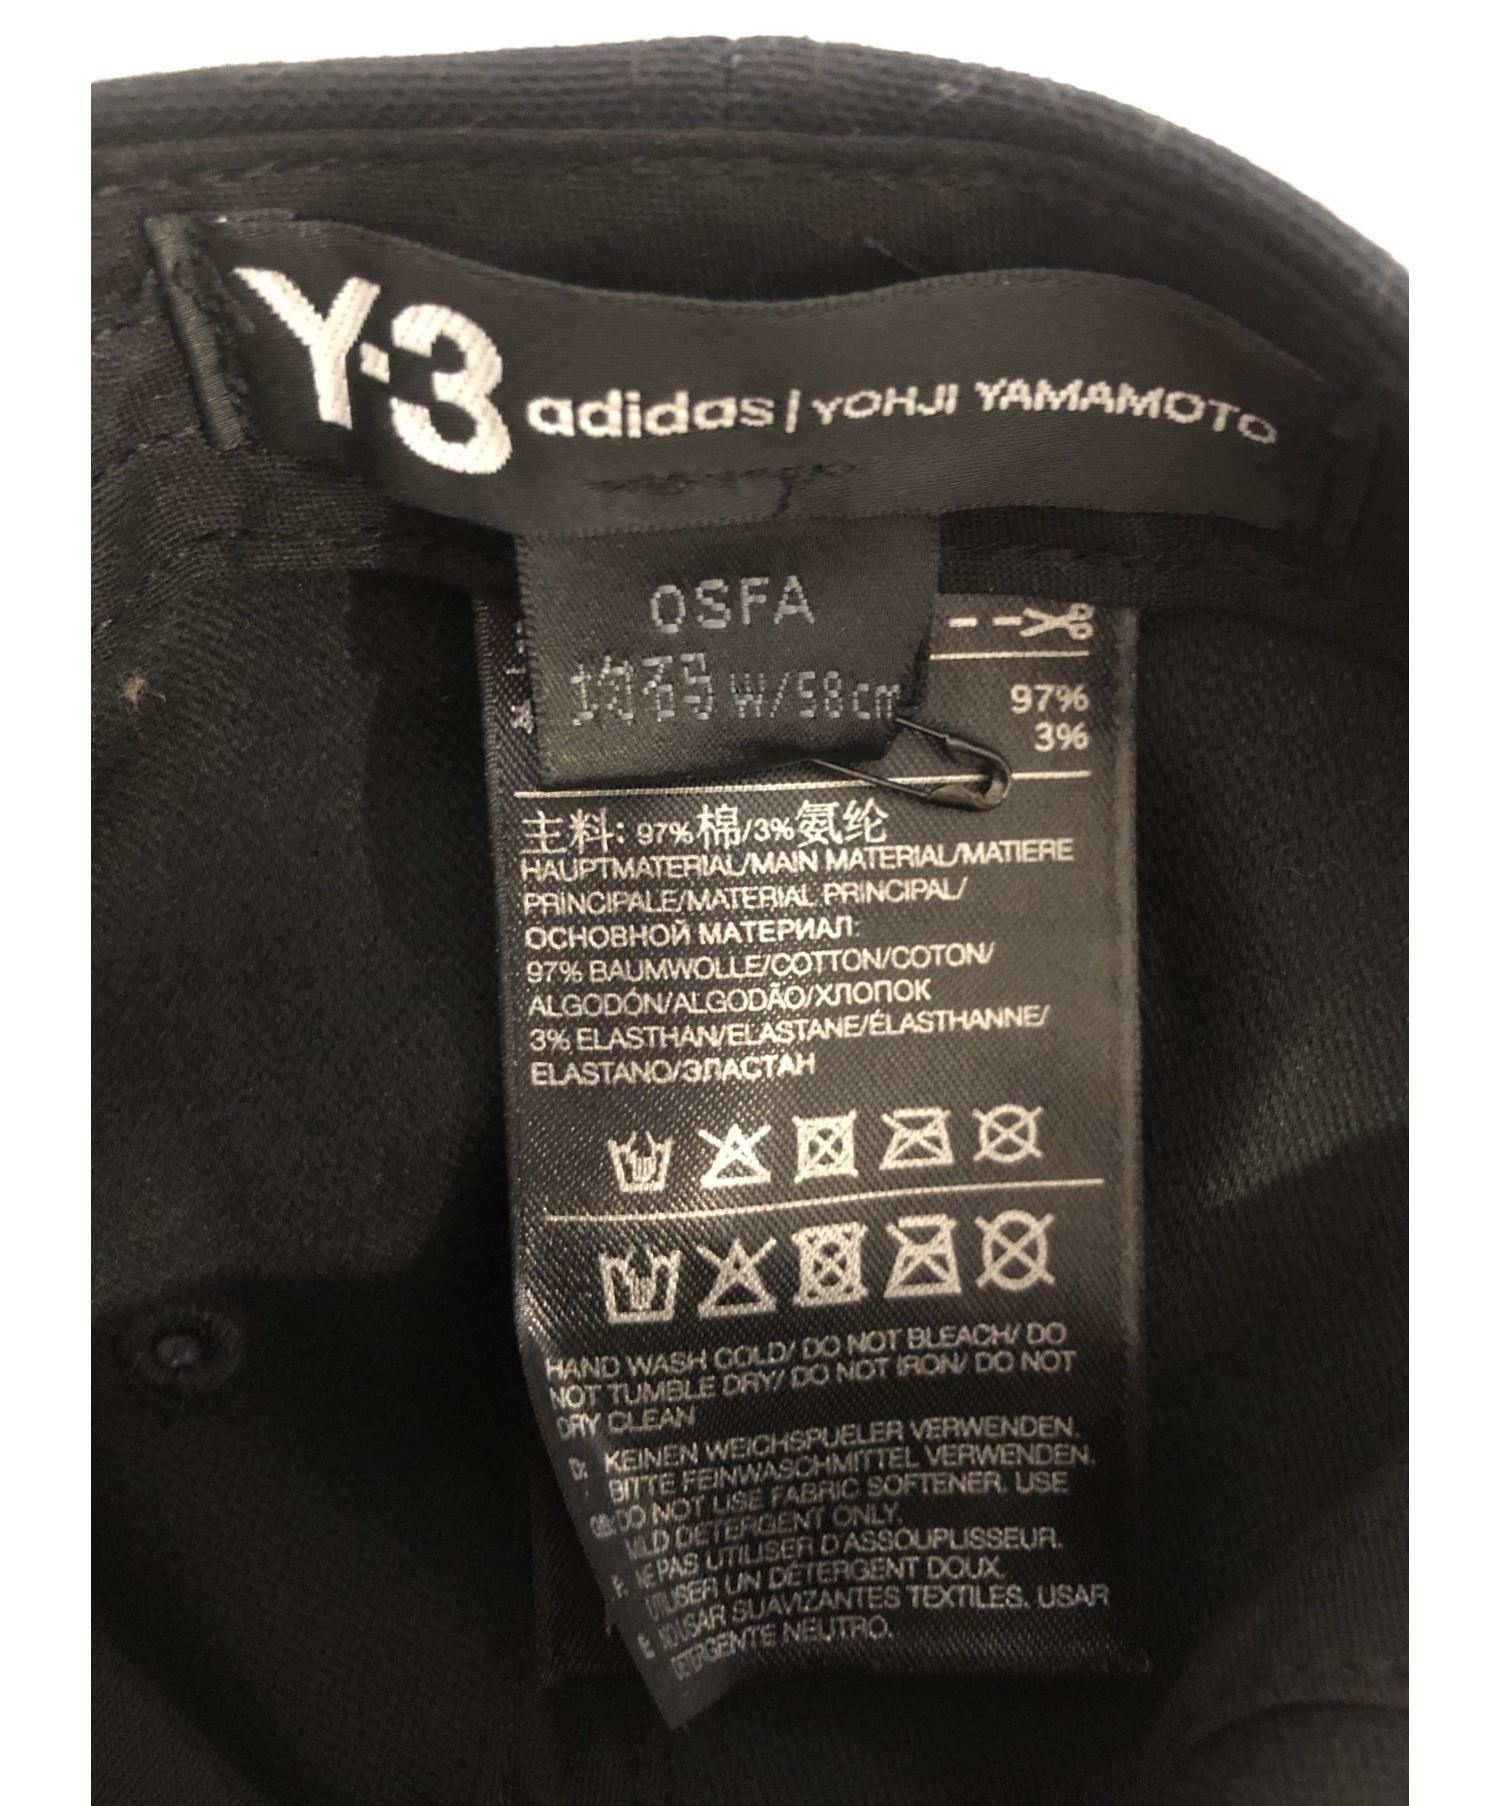 Y-3 (ワイスリー) キャップ/ Y-3 3STP CAP レッド×ブラック 直営店限定 